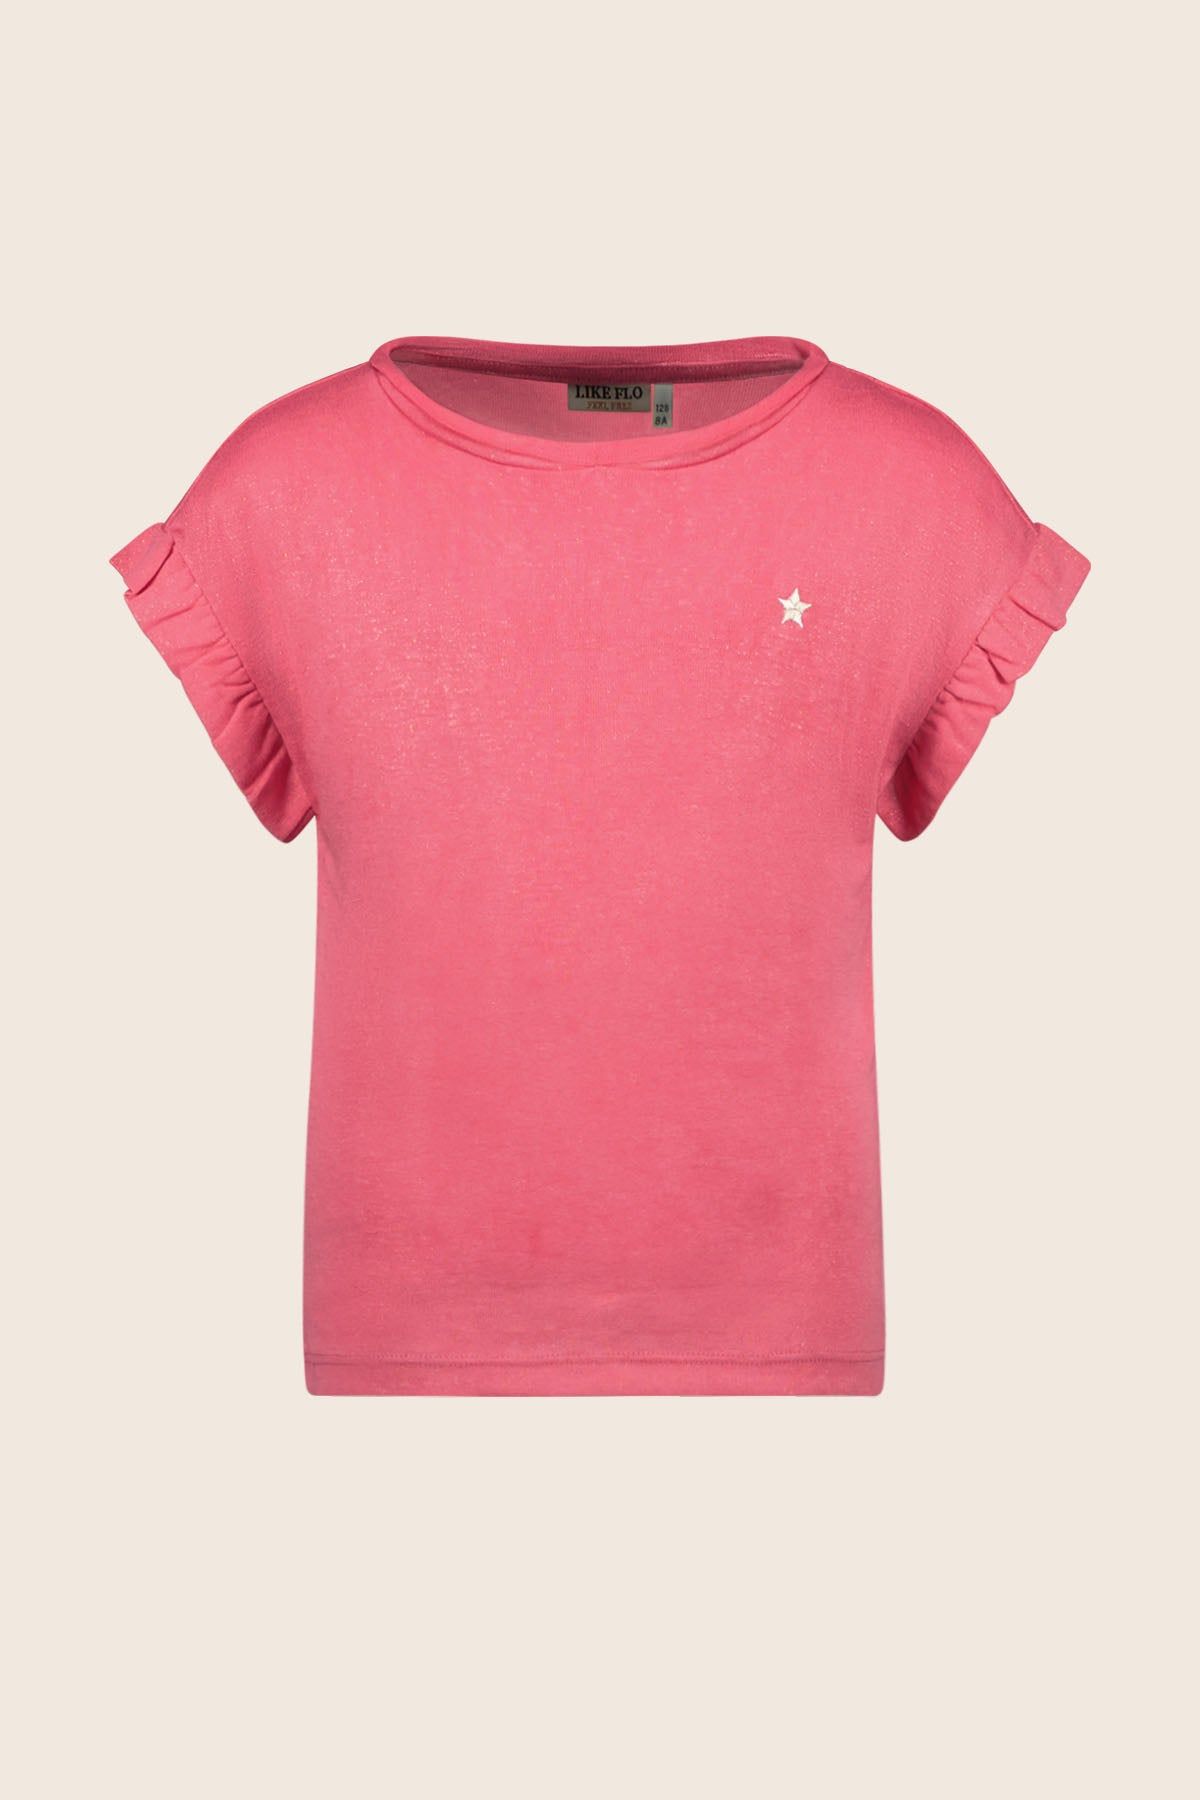 T-Shirt Top GUUSJE pink